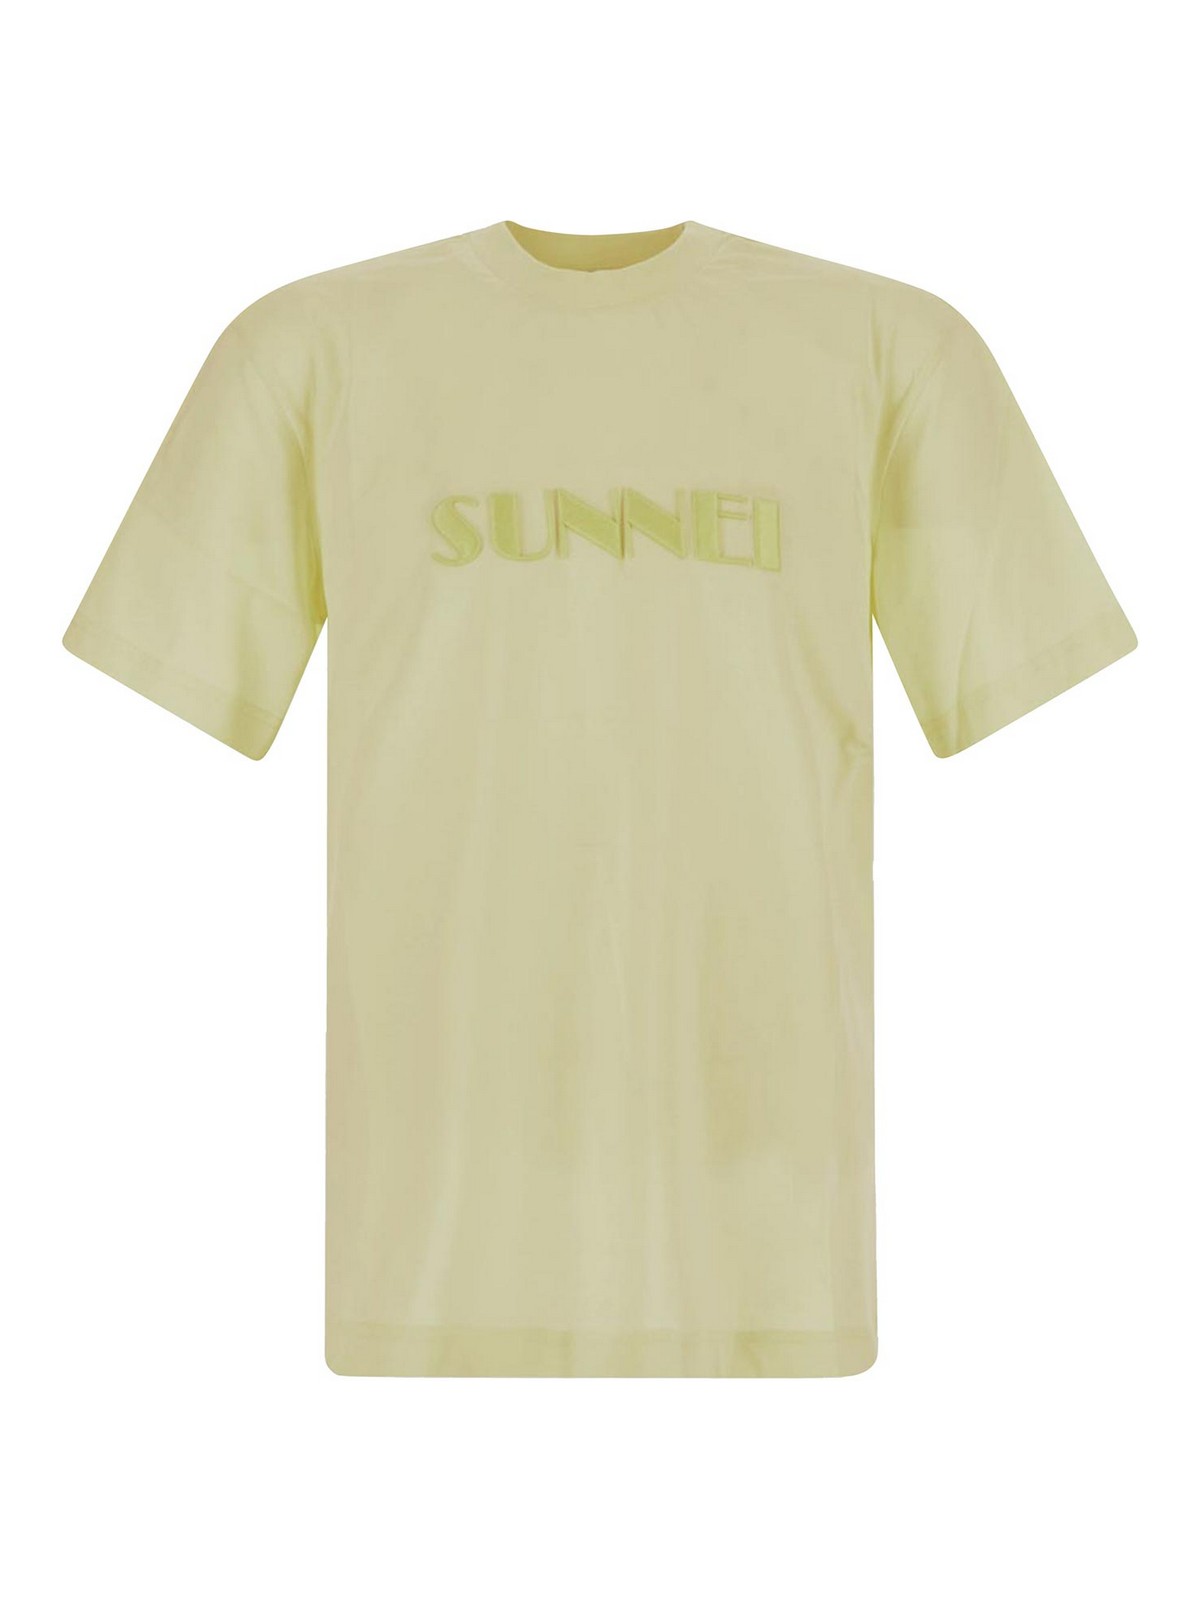 Sunnei T-shirt In Light Yellow